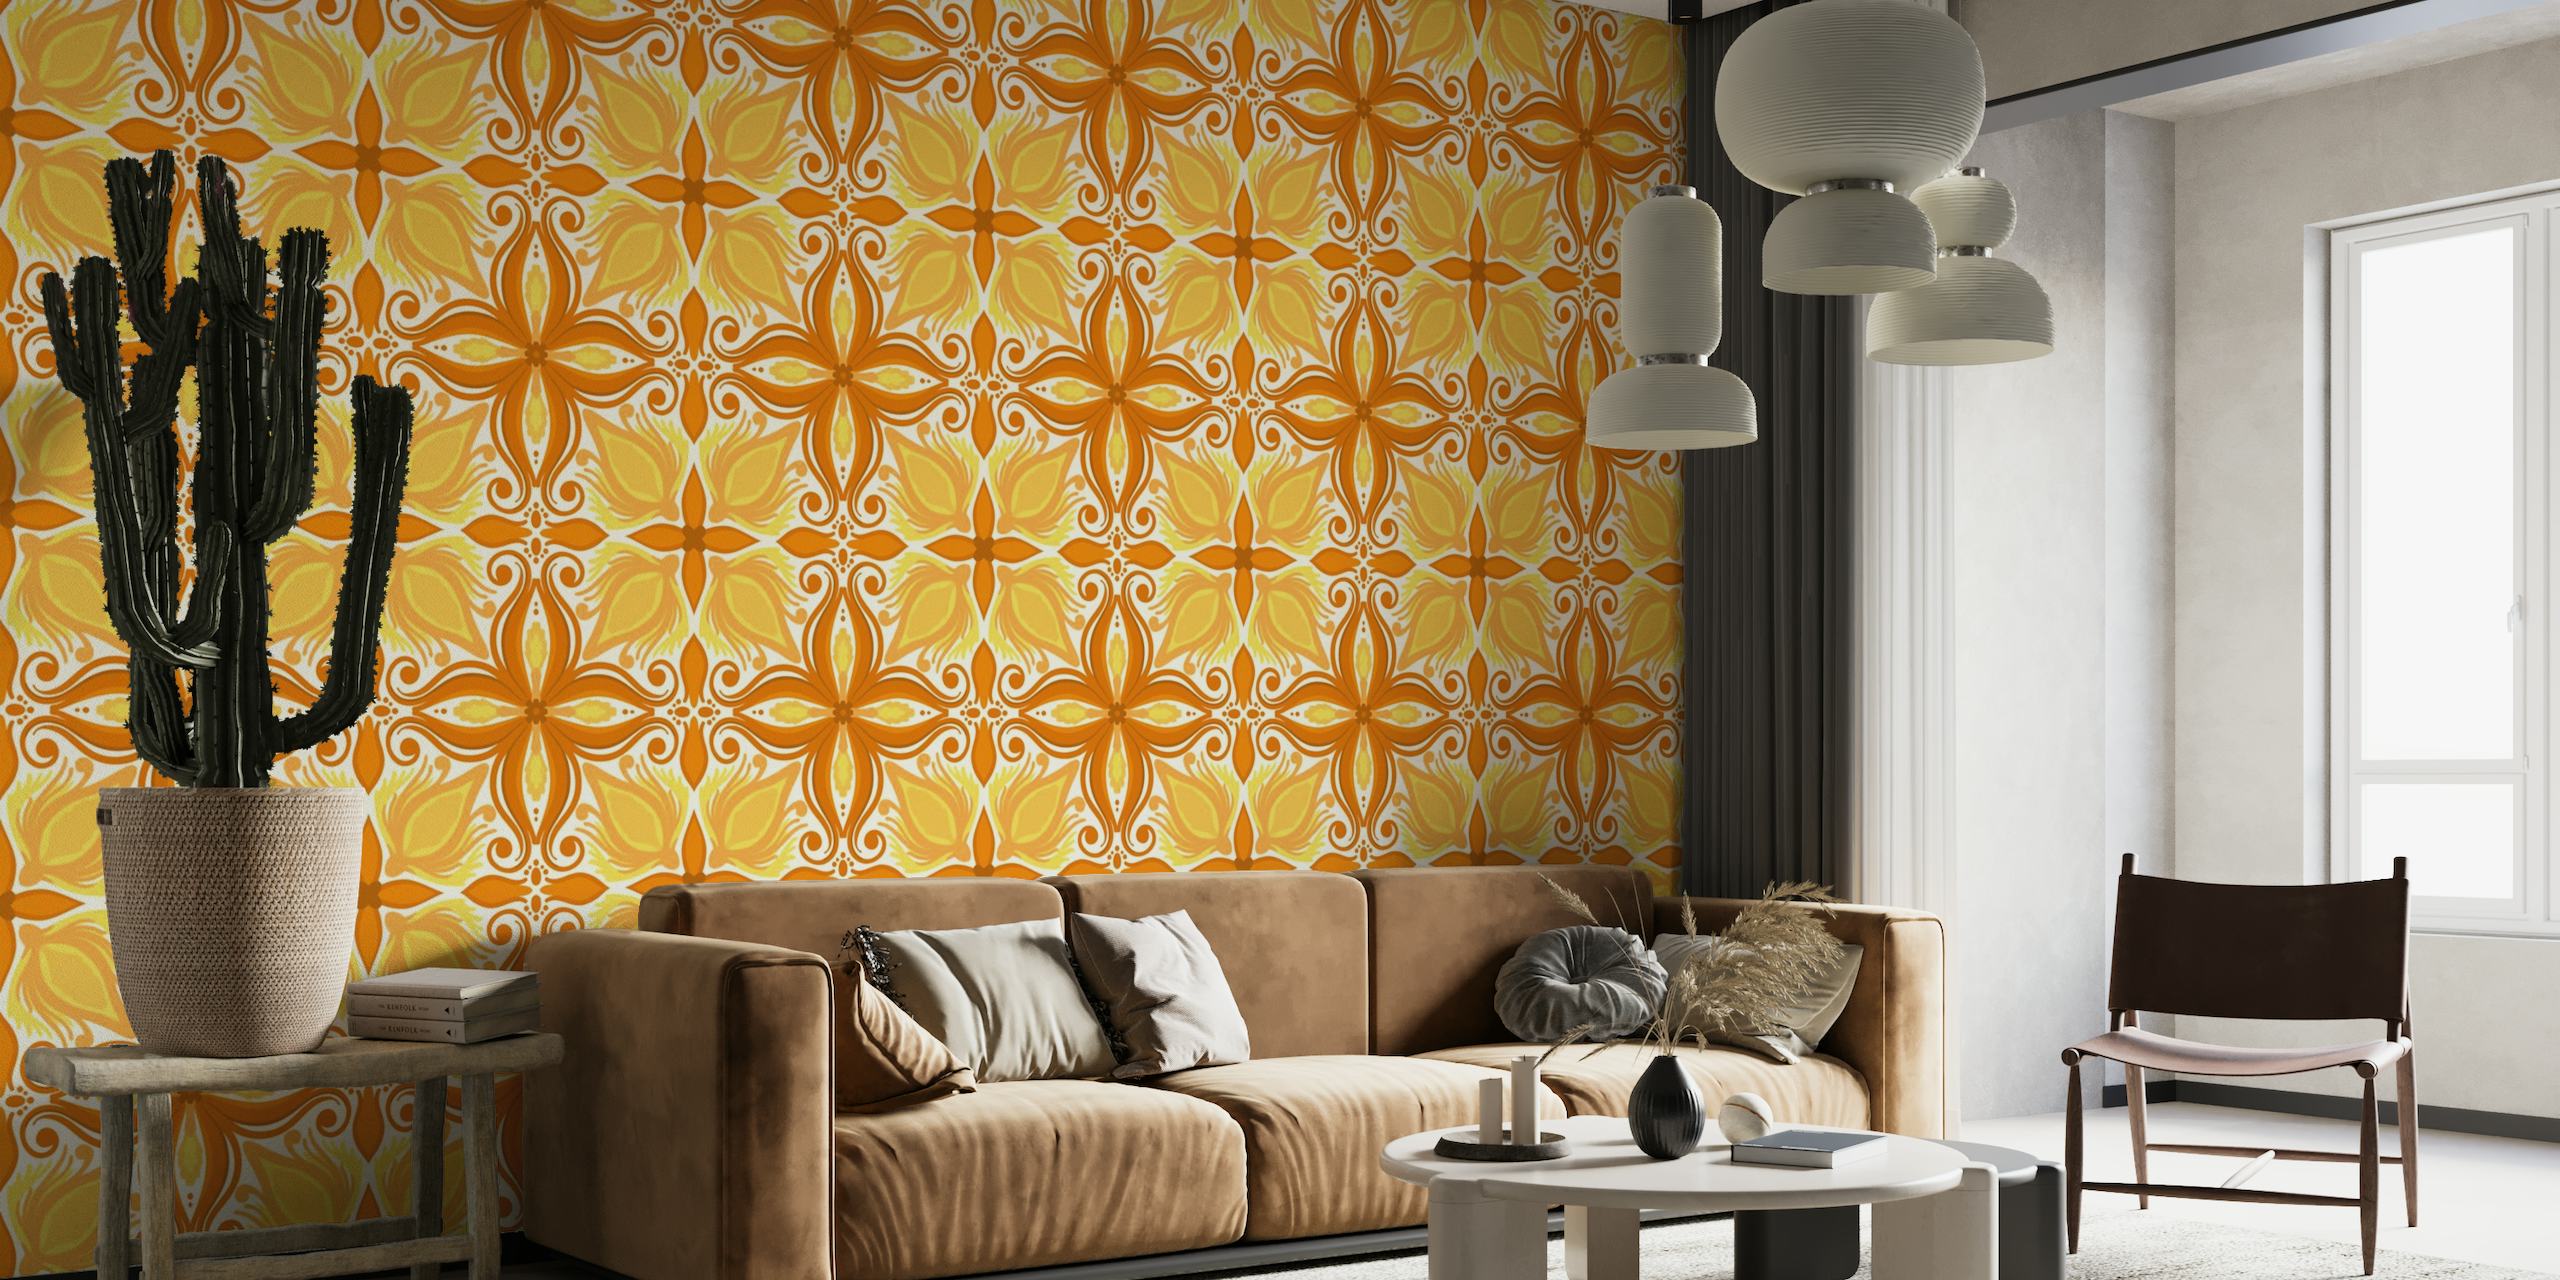 Ornate tiles, yellow and orange 8 behang